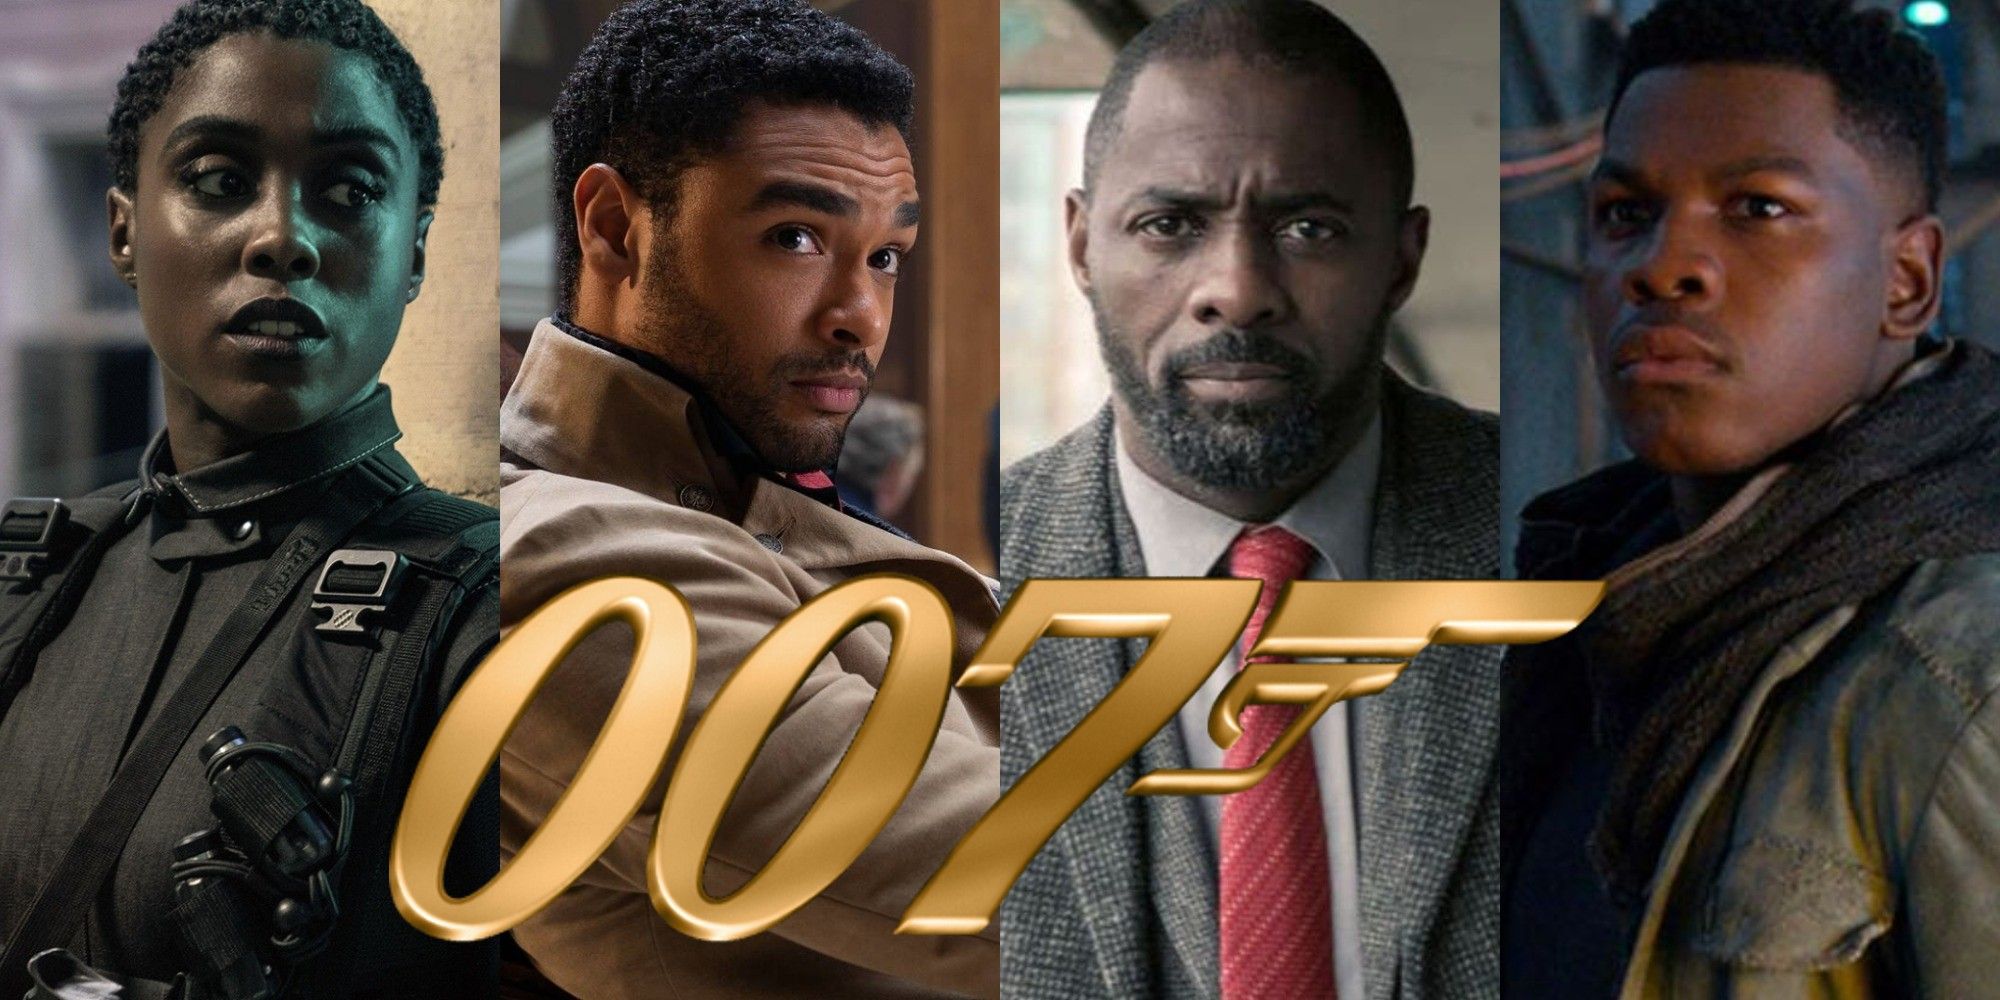 Idris Elba & 14 Other Black British Actors Who Could Play The Next James Bond